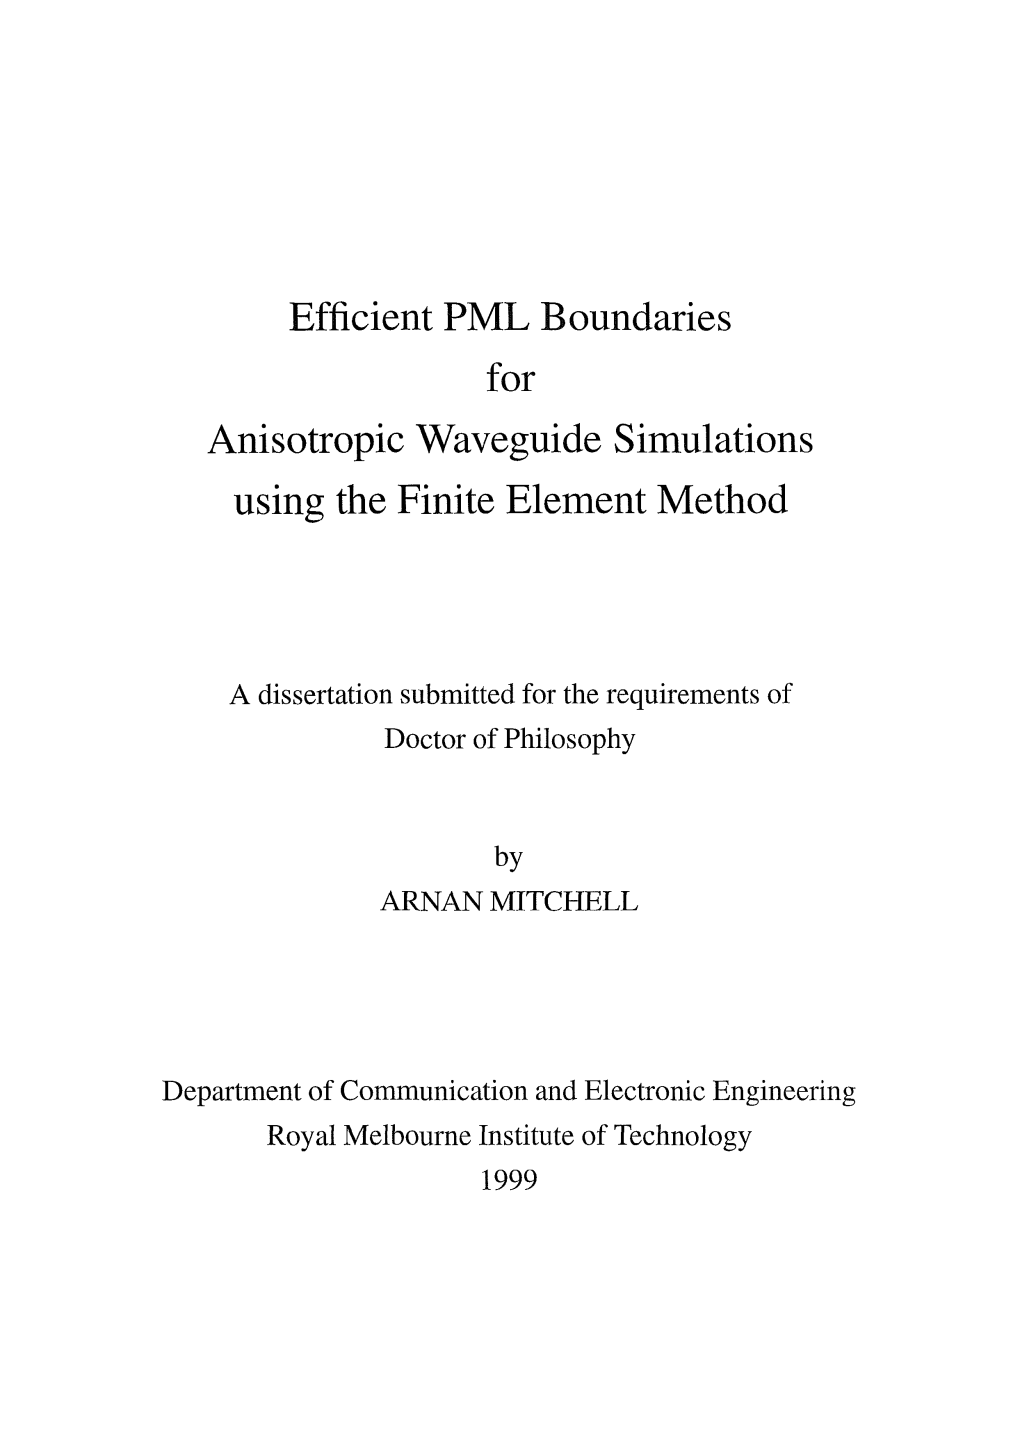 Efficient PML Boundaries for Anisotropic Waveguide Simulations Using the Finite Element Method